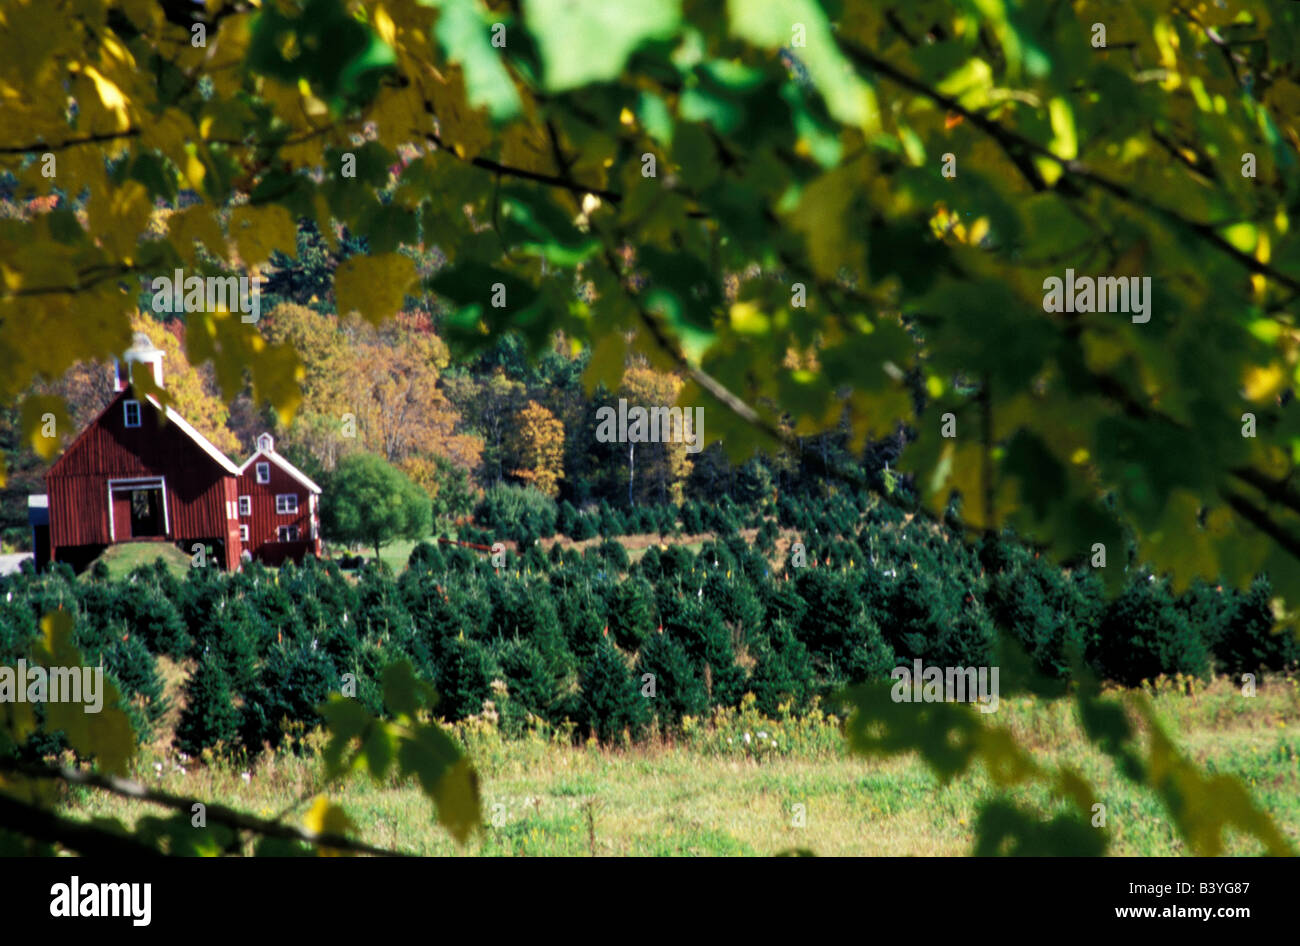 North America, United States, New England. Christmas tree farm. Stock Photo